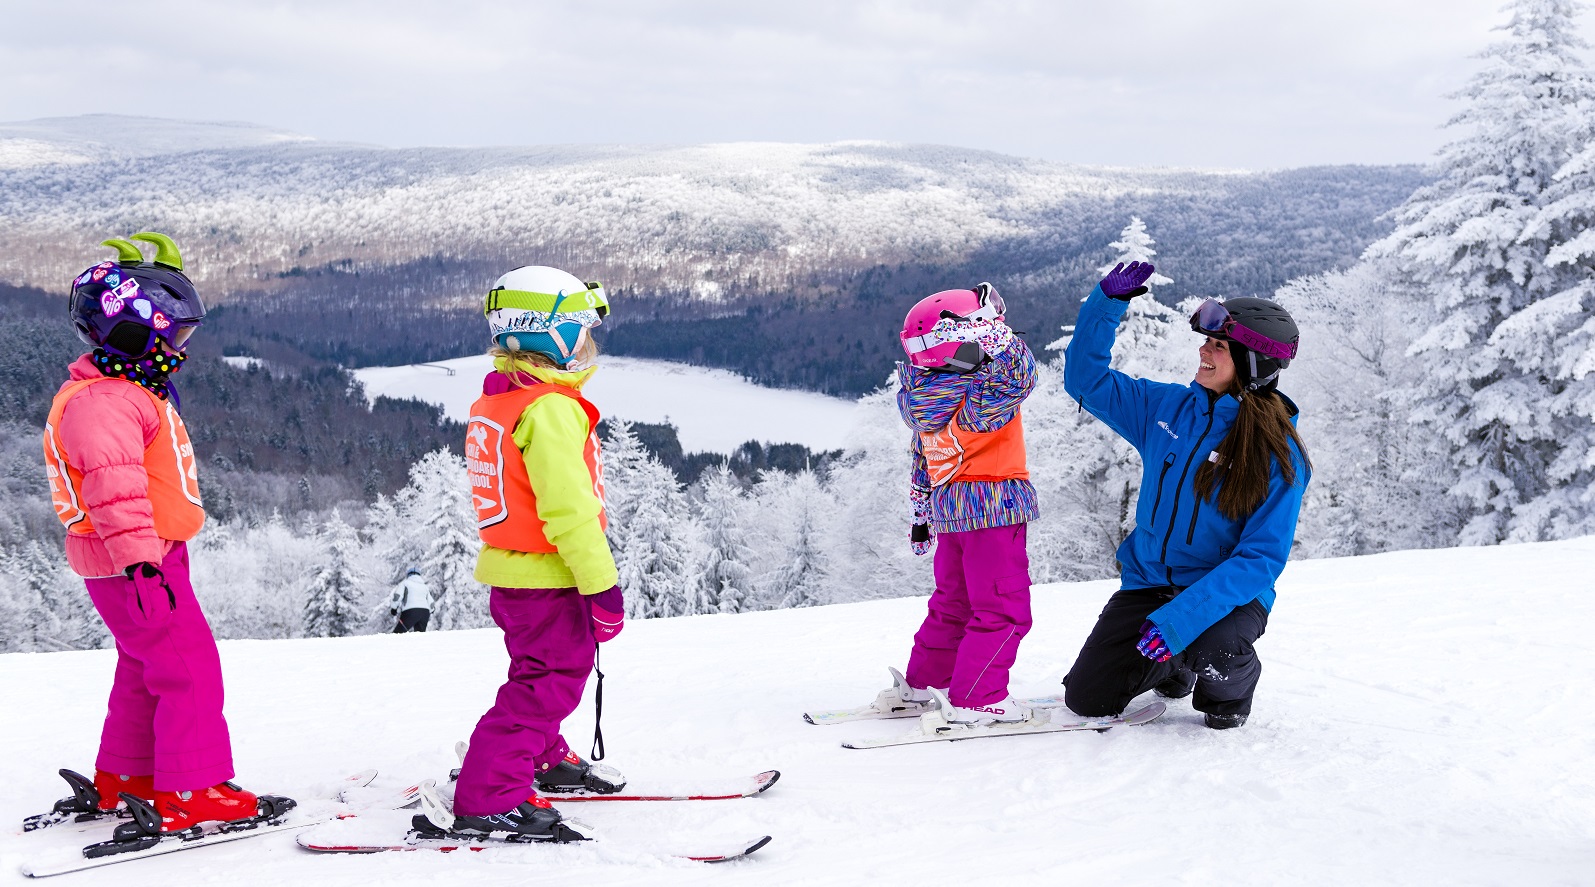 ski instructor with three kids in ski gear